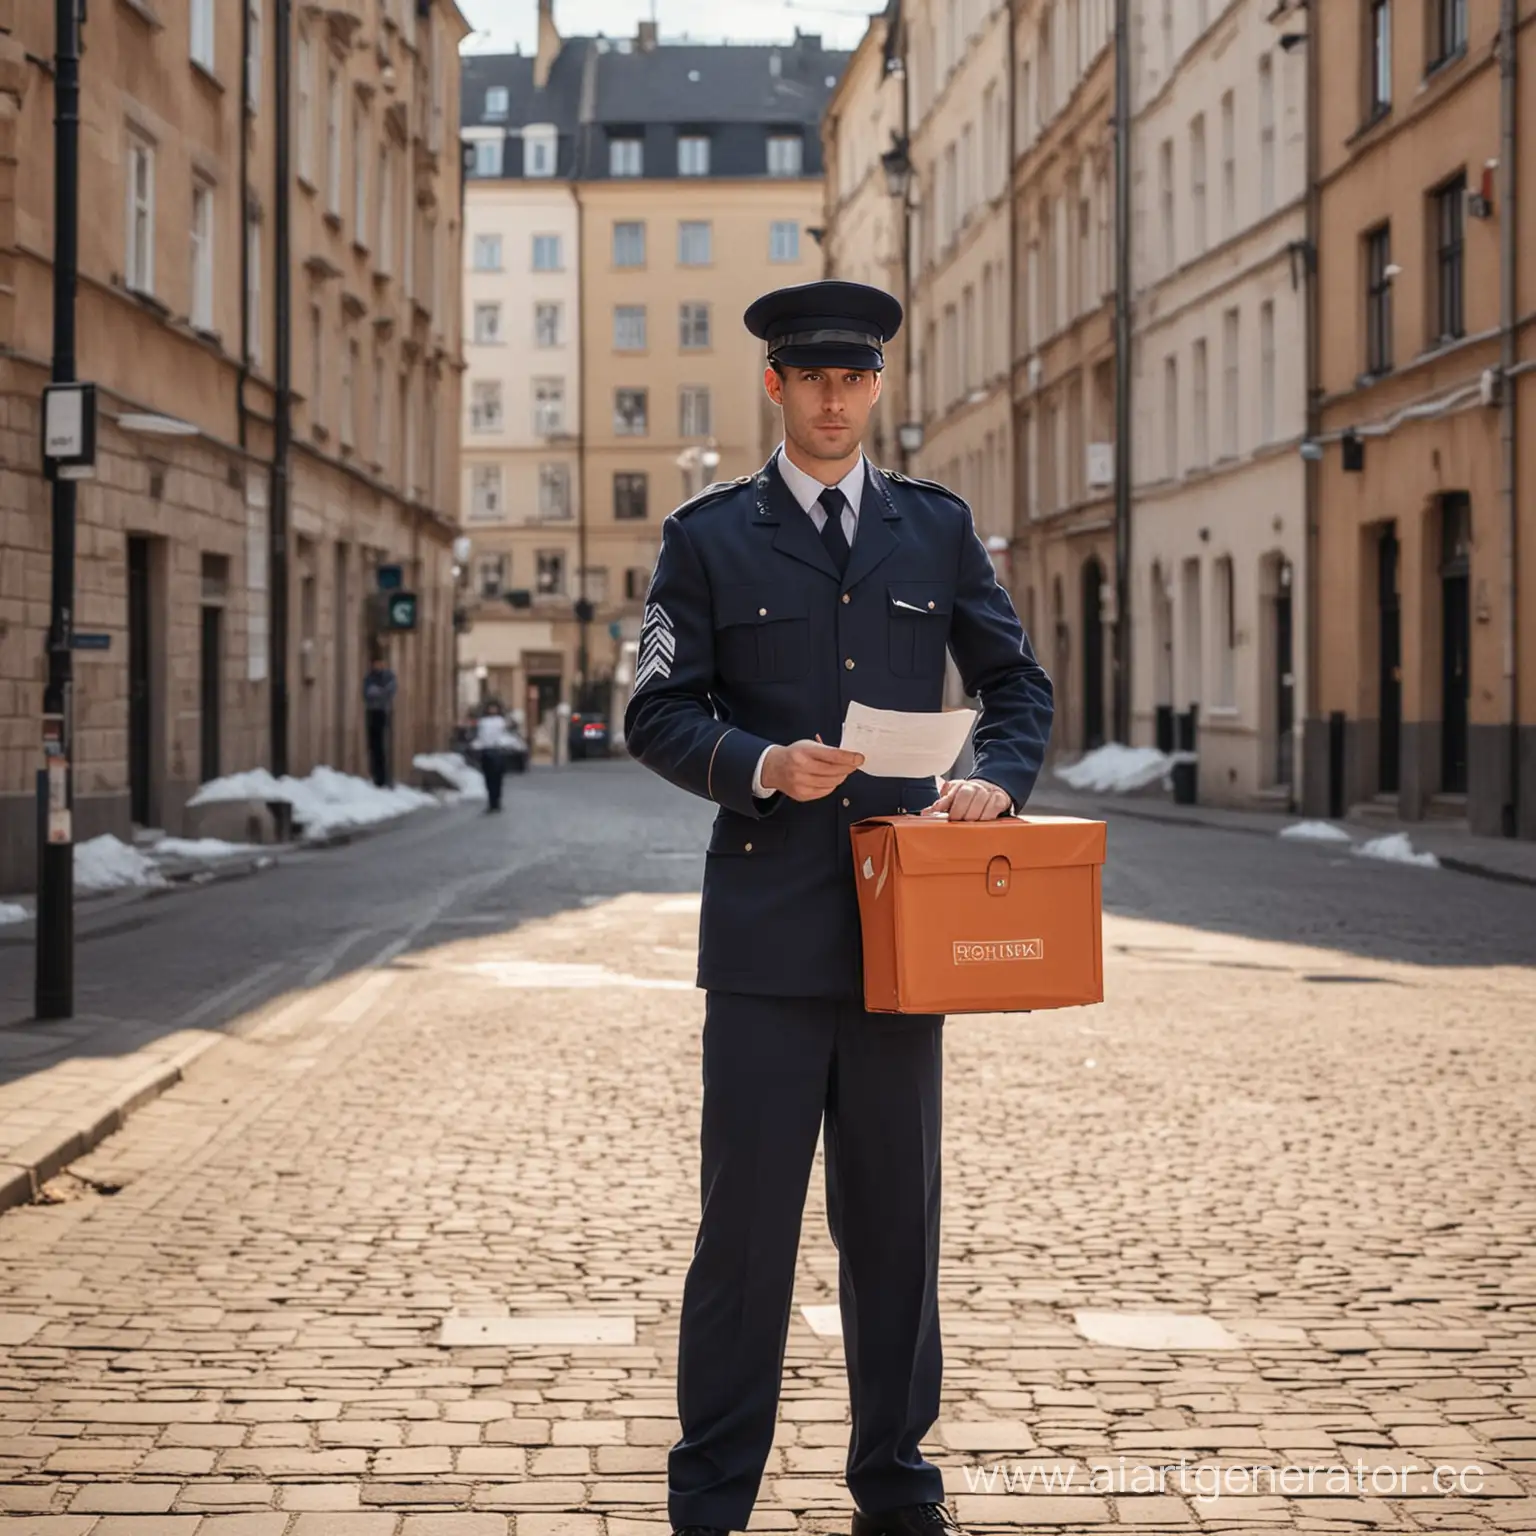 Confused-Postman-in-Uniform-Amid-Urban-Landscape